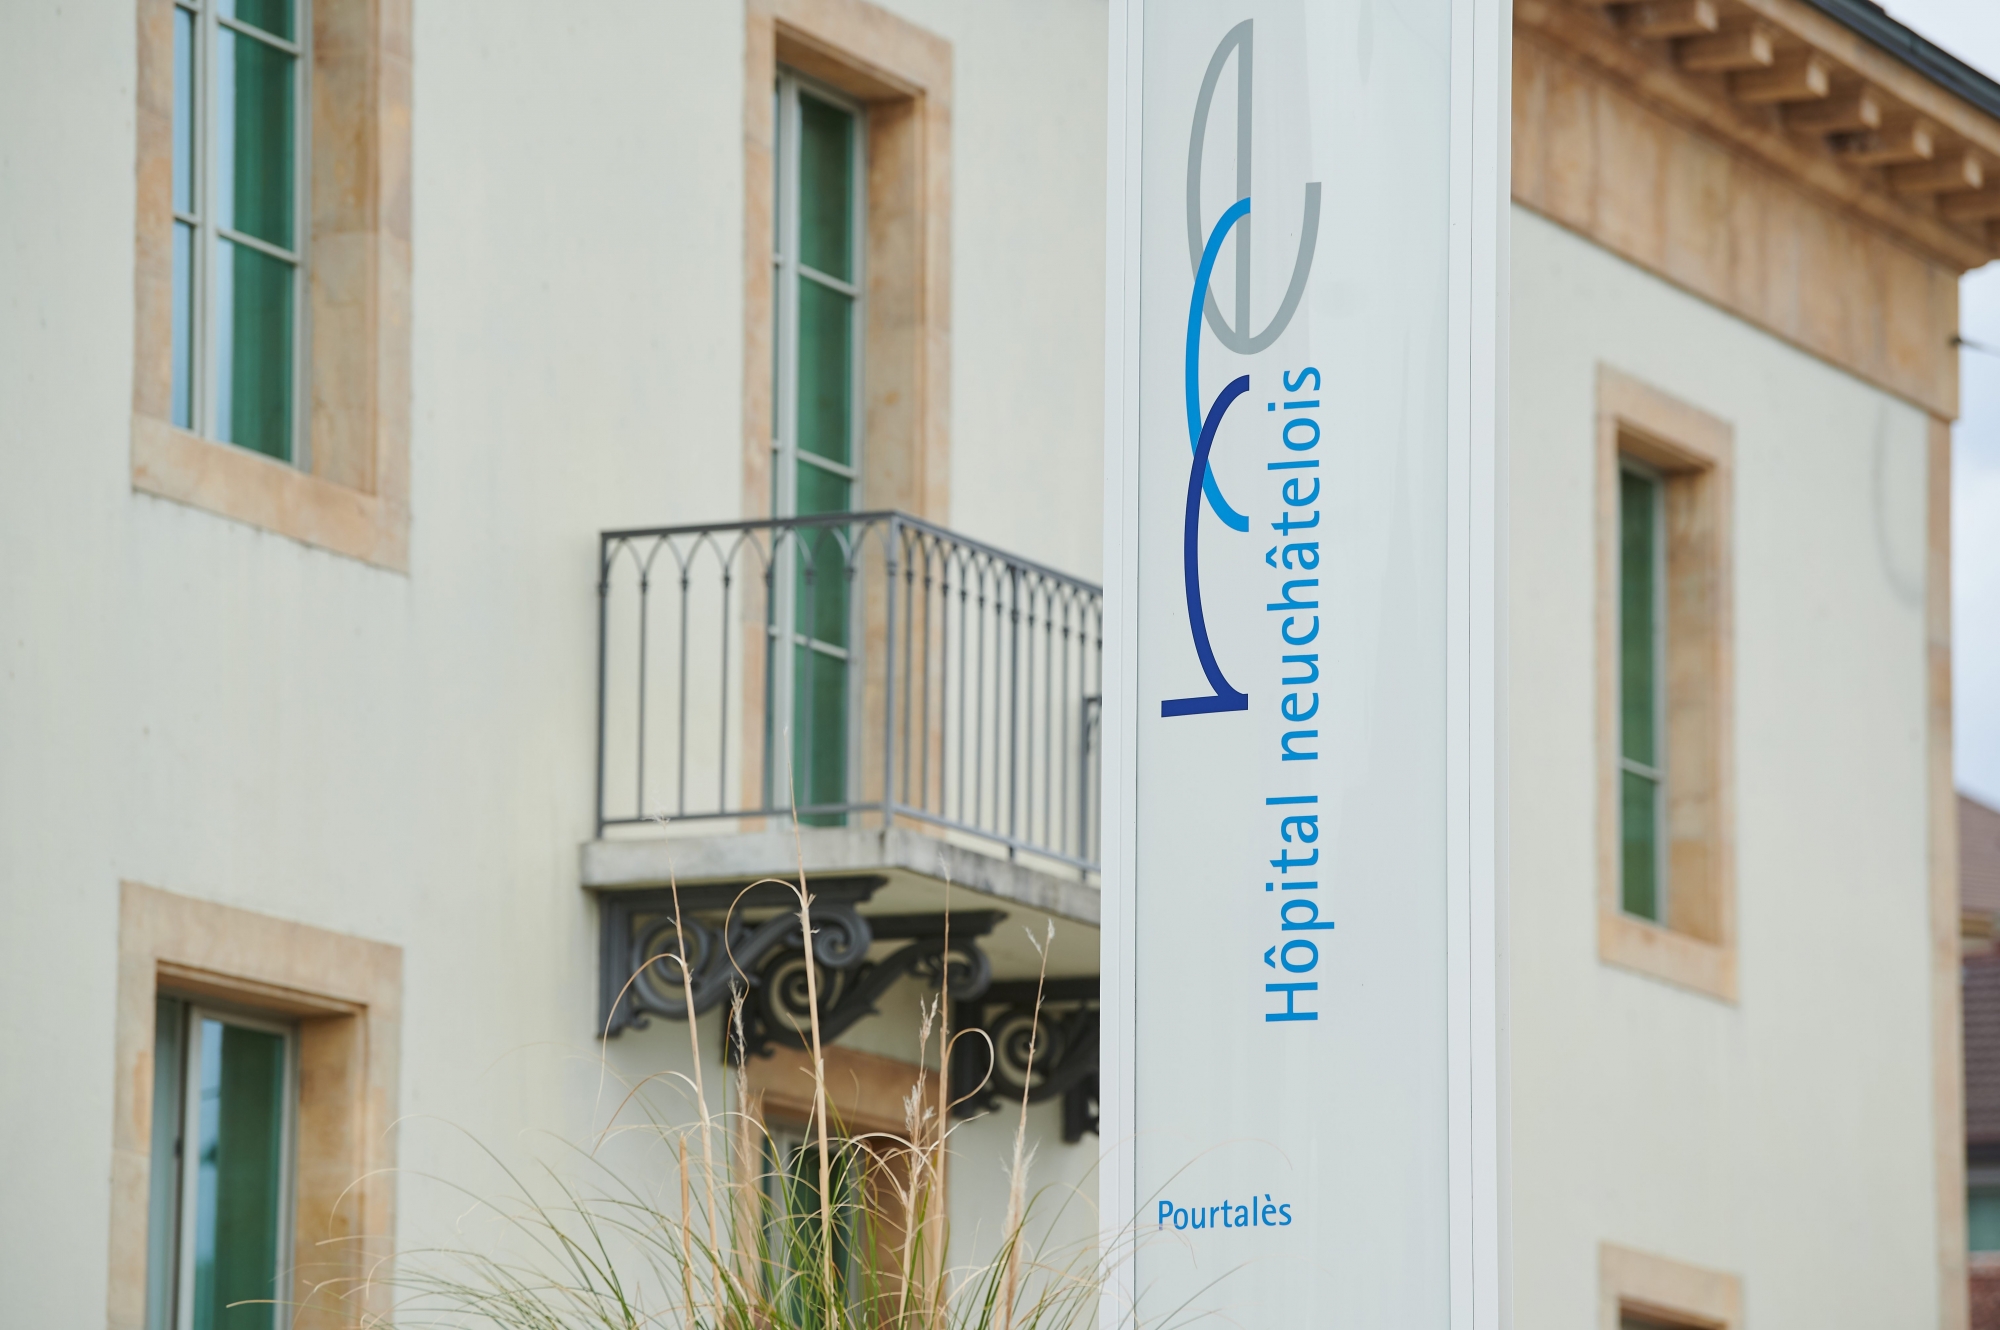 L’Hôpital du Jura, l’Hôpital neuchâtelois et l’Hôpital du Jura bernois ont initié ensemble le projet, en 2009.